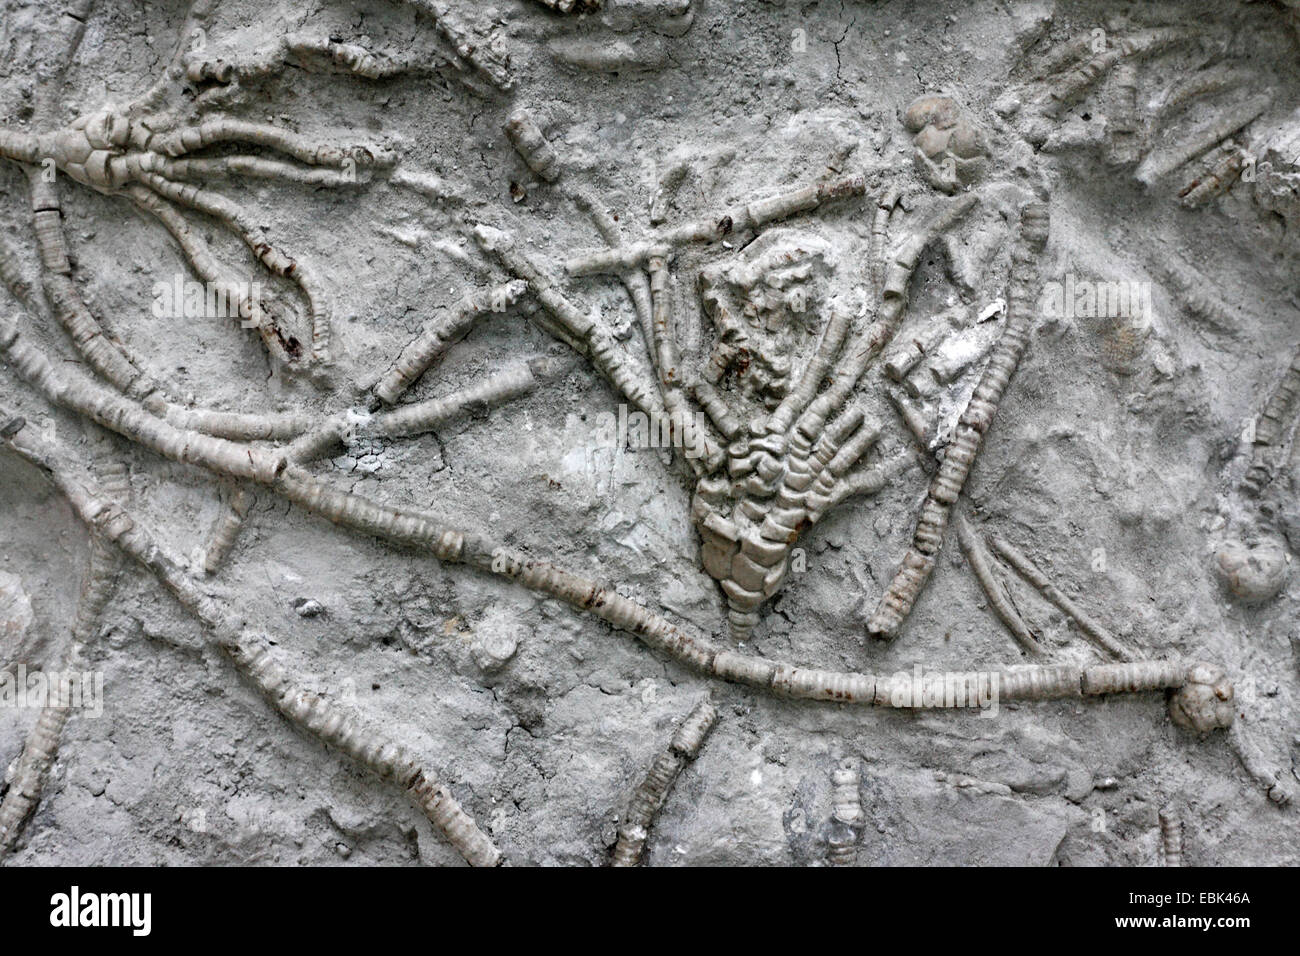 sea bottom with plant fossils (Moscovicrinus multiplex, Cromiocrinus simplex) Stock Photo